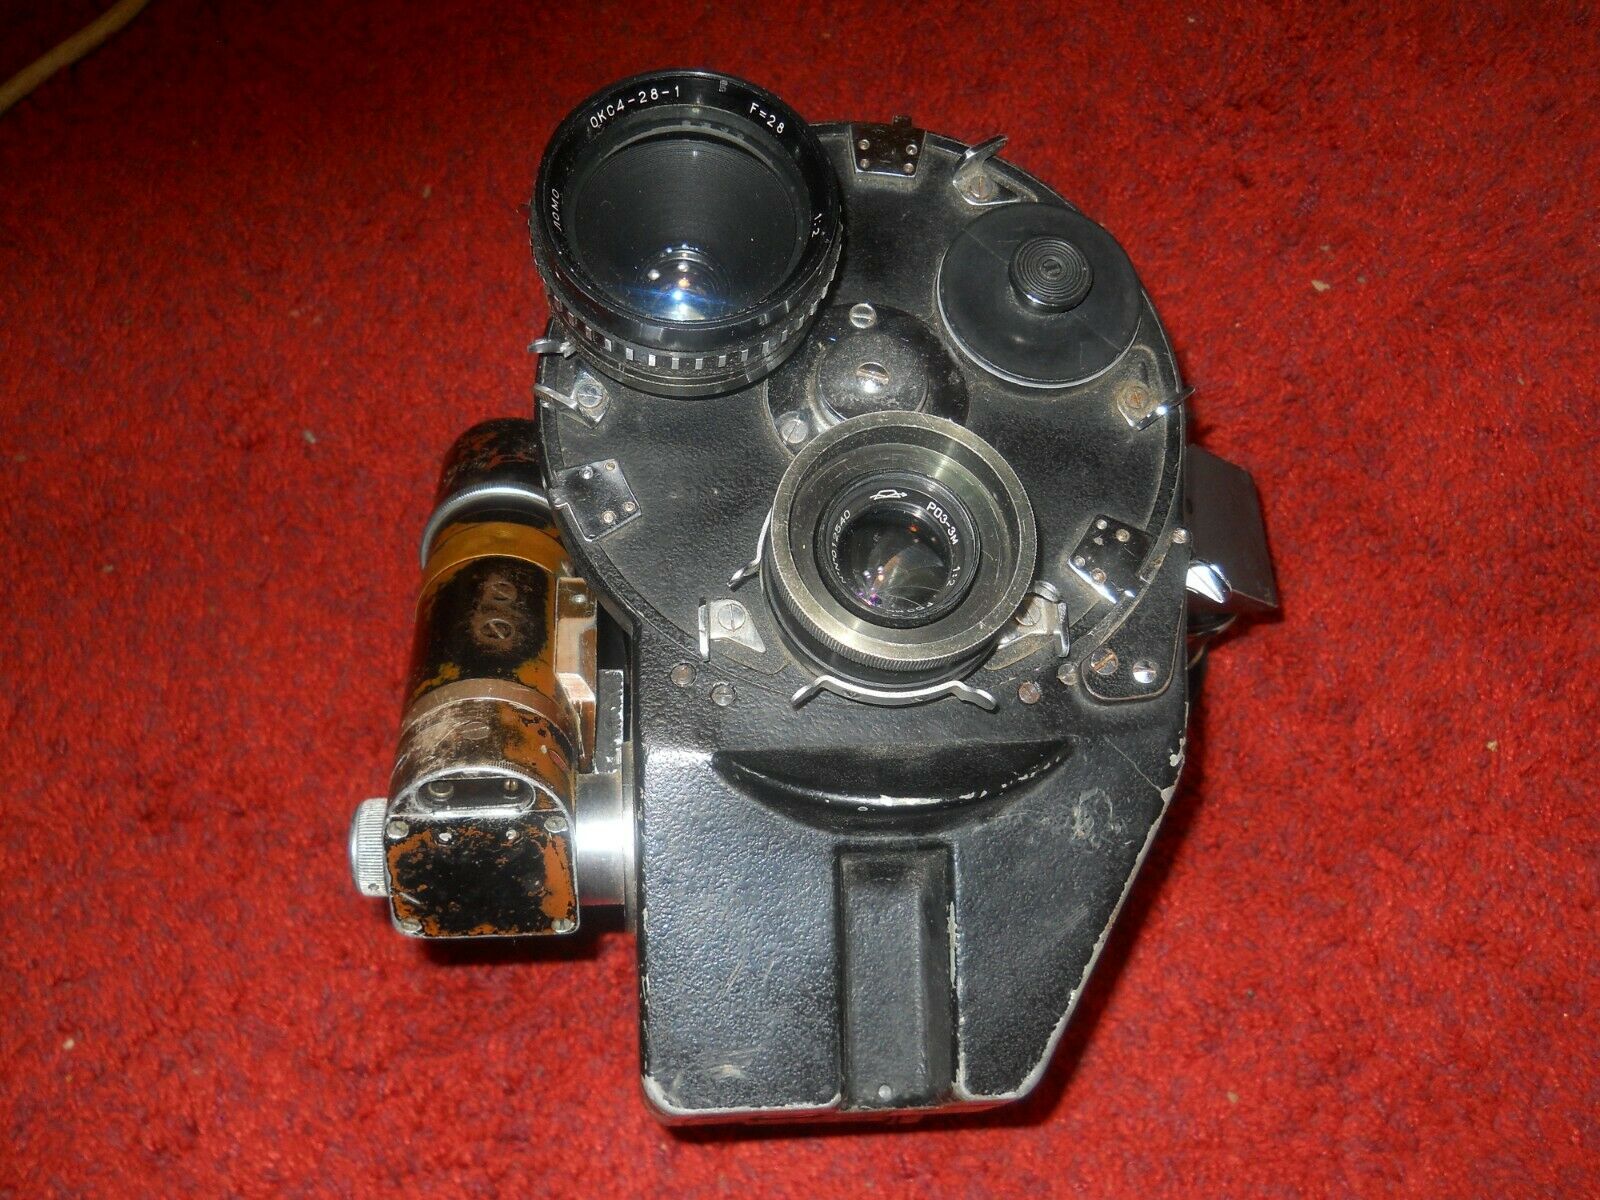 Konvas 1kcp-1m 35mm Movie Camera And Lenses